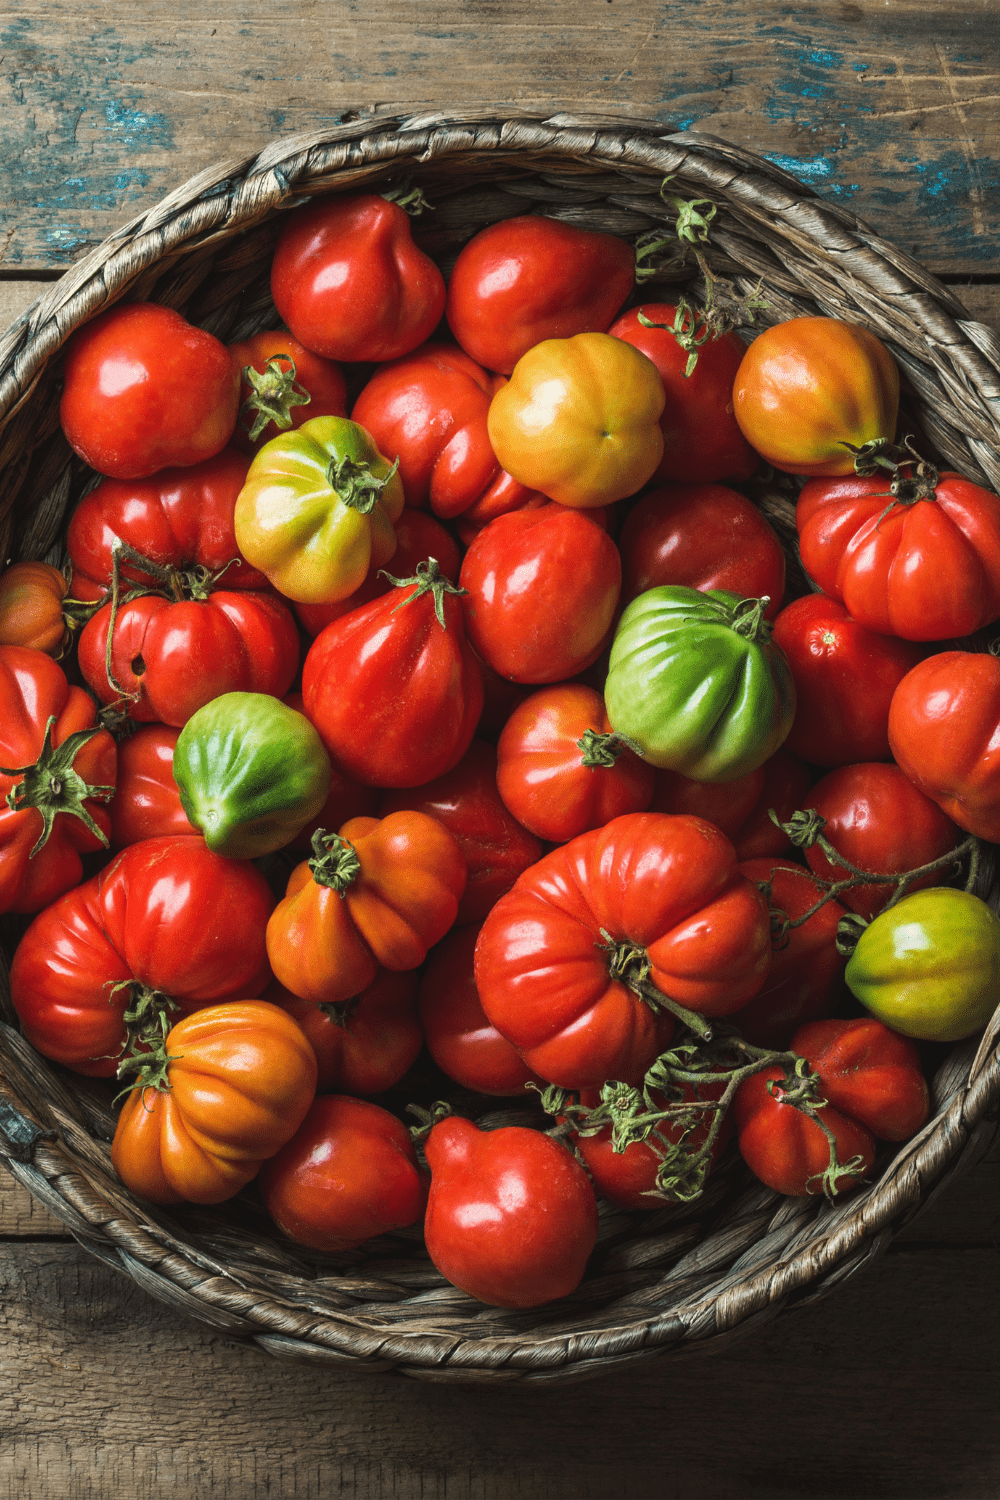 heirloom tomatoes in a basket